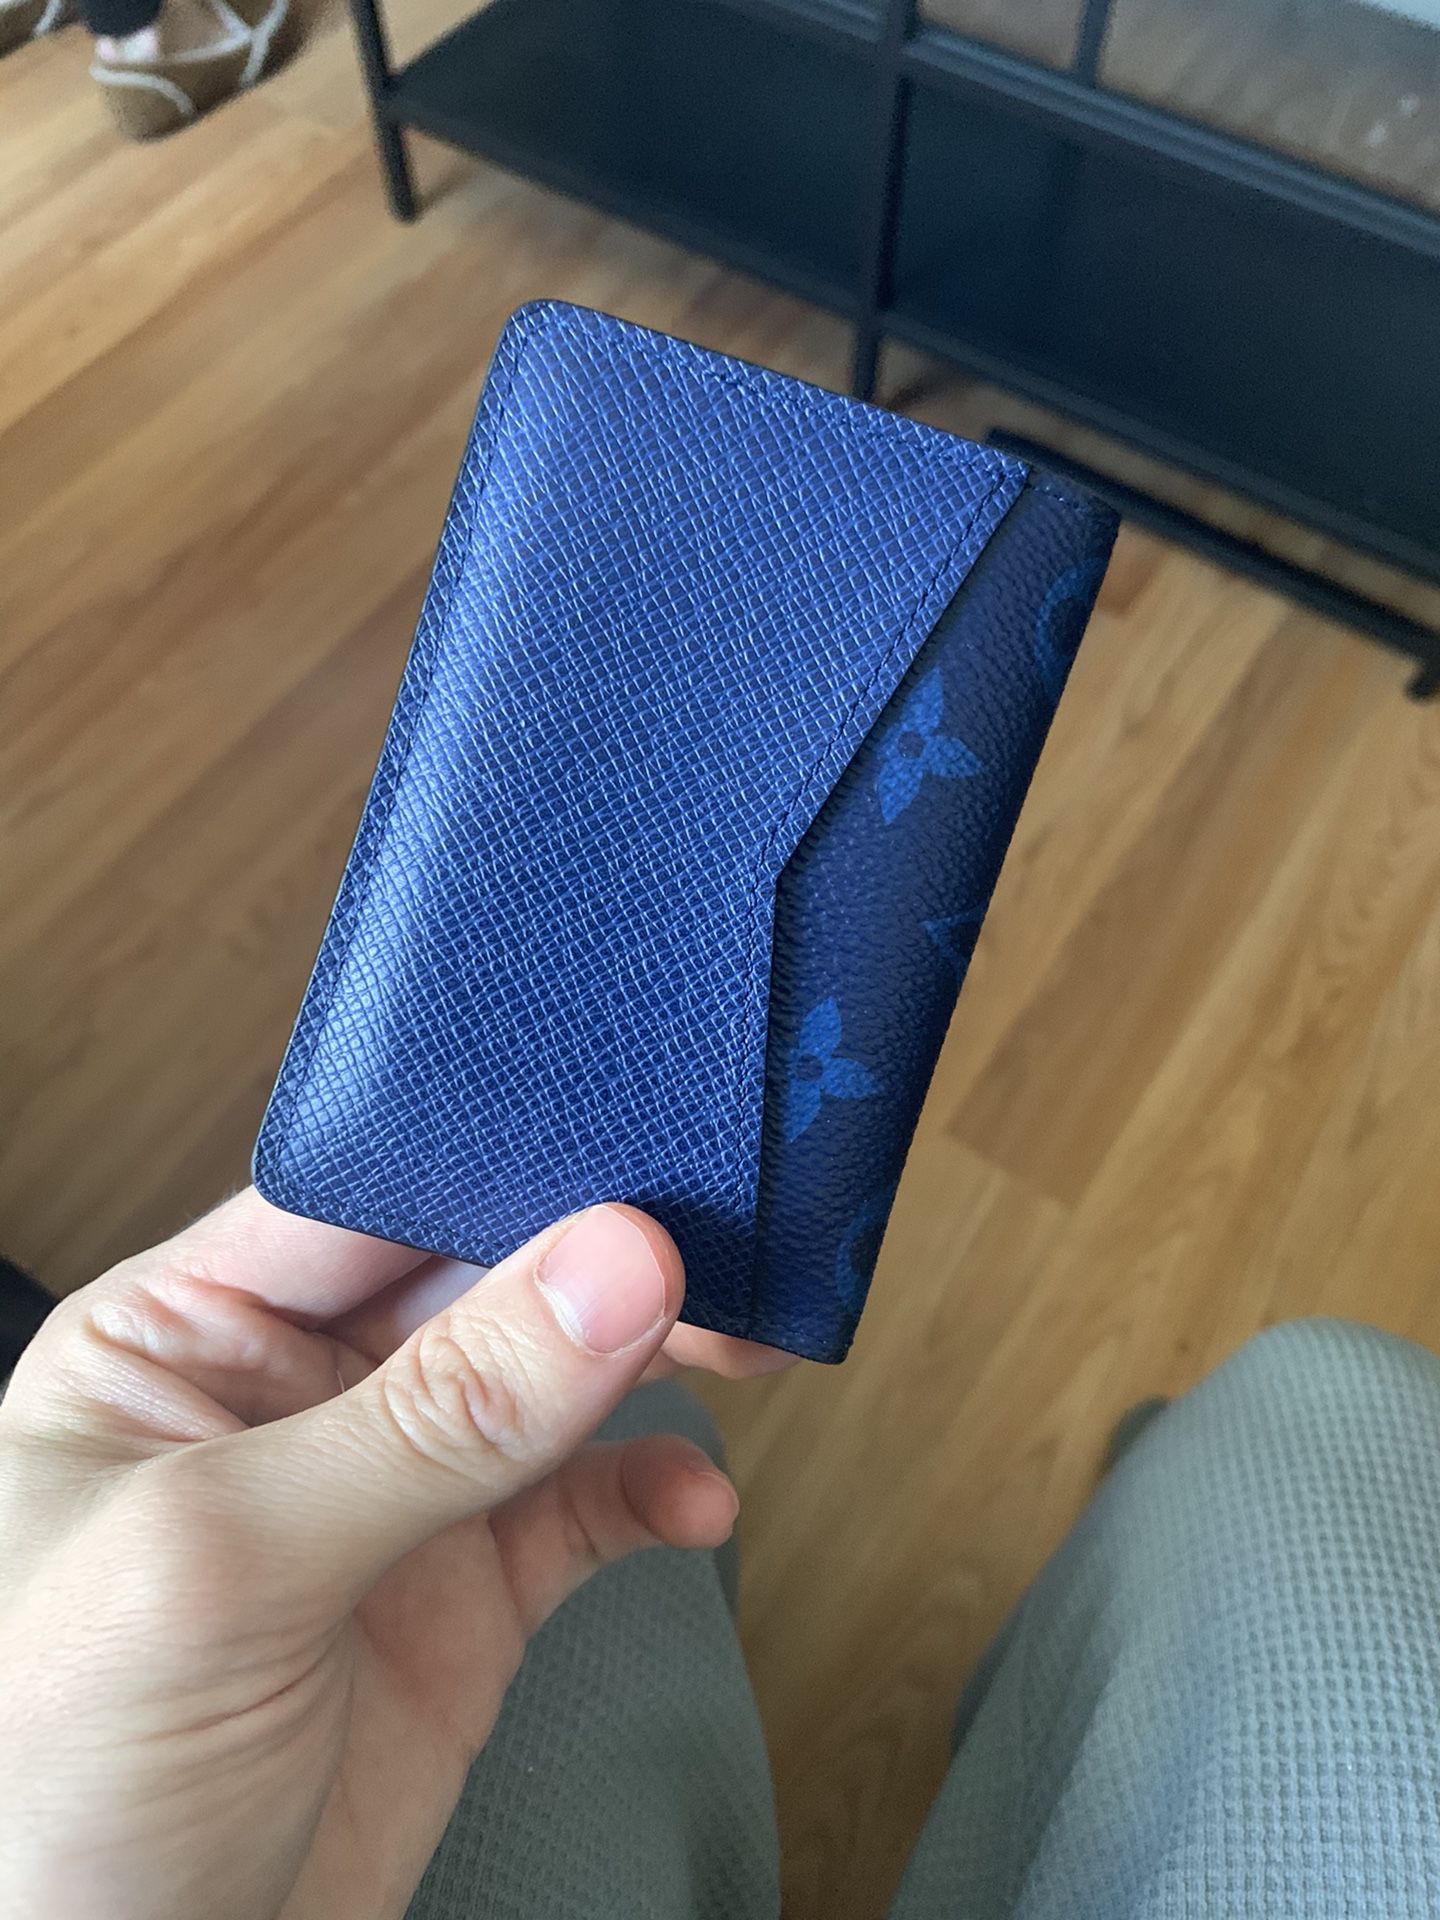 Louis Vuitton blue Virgil abloh pocket organizer wallet like new for Sale  in Bayonne, NJ - OfferUp